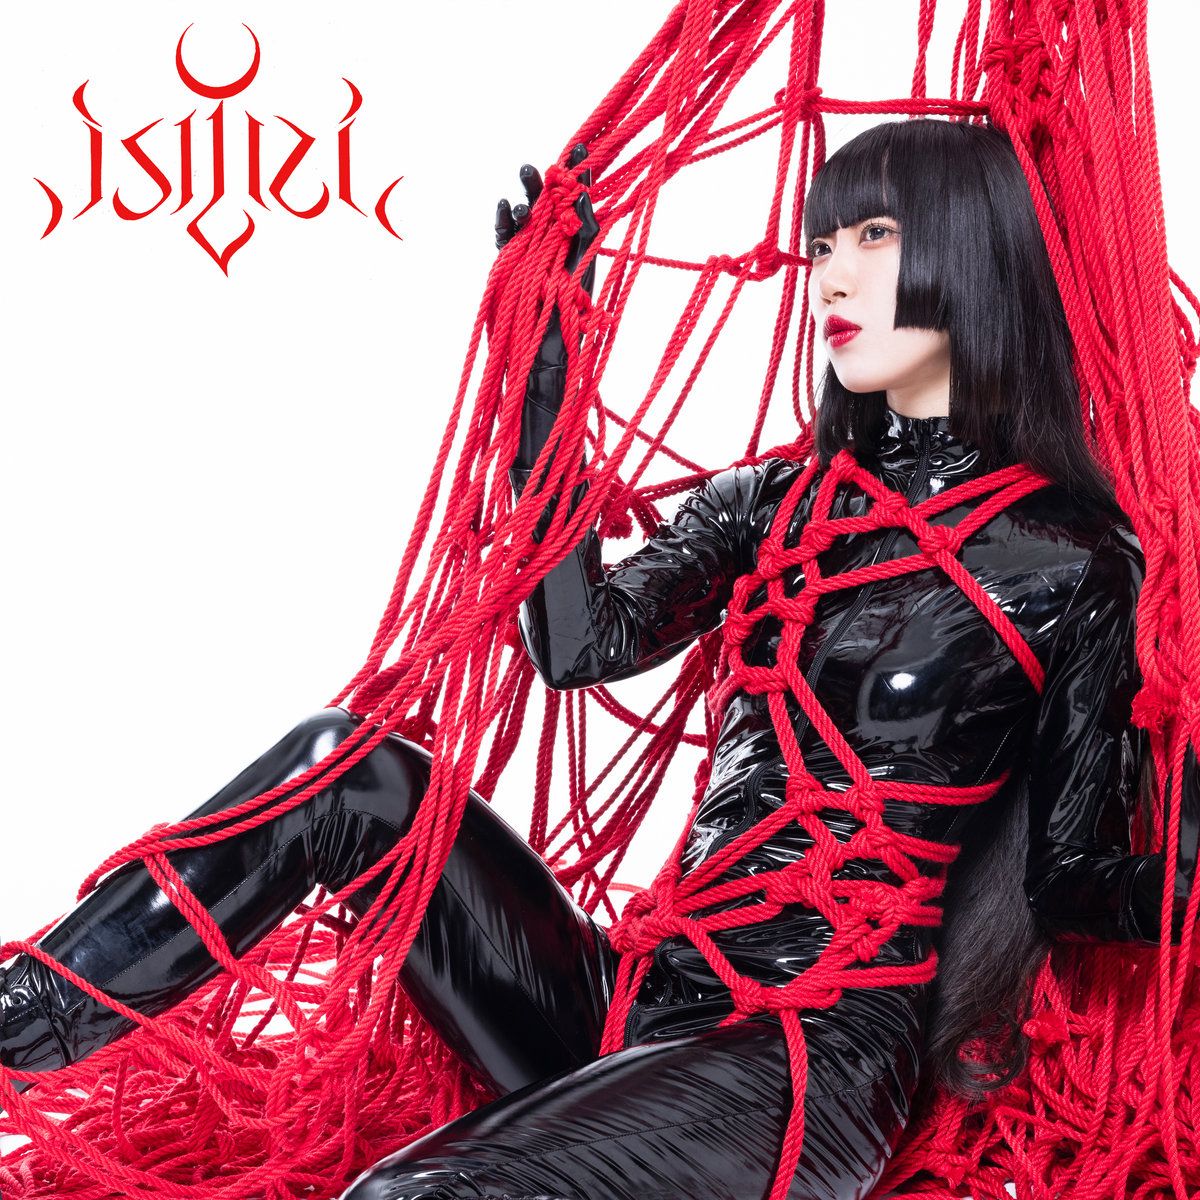 Isiliel (J-Metal)